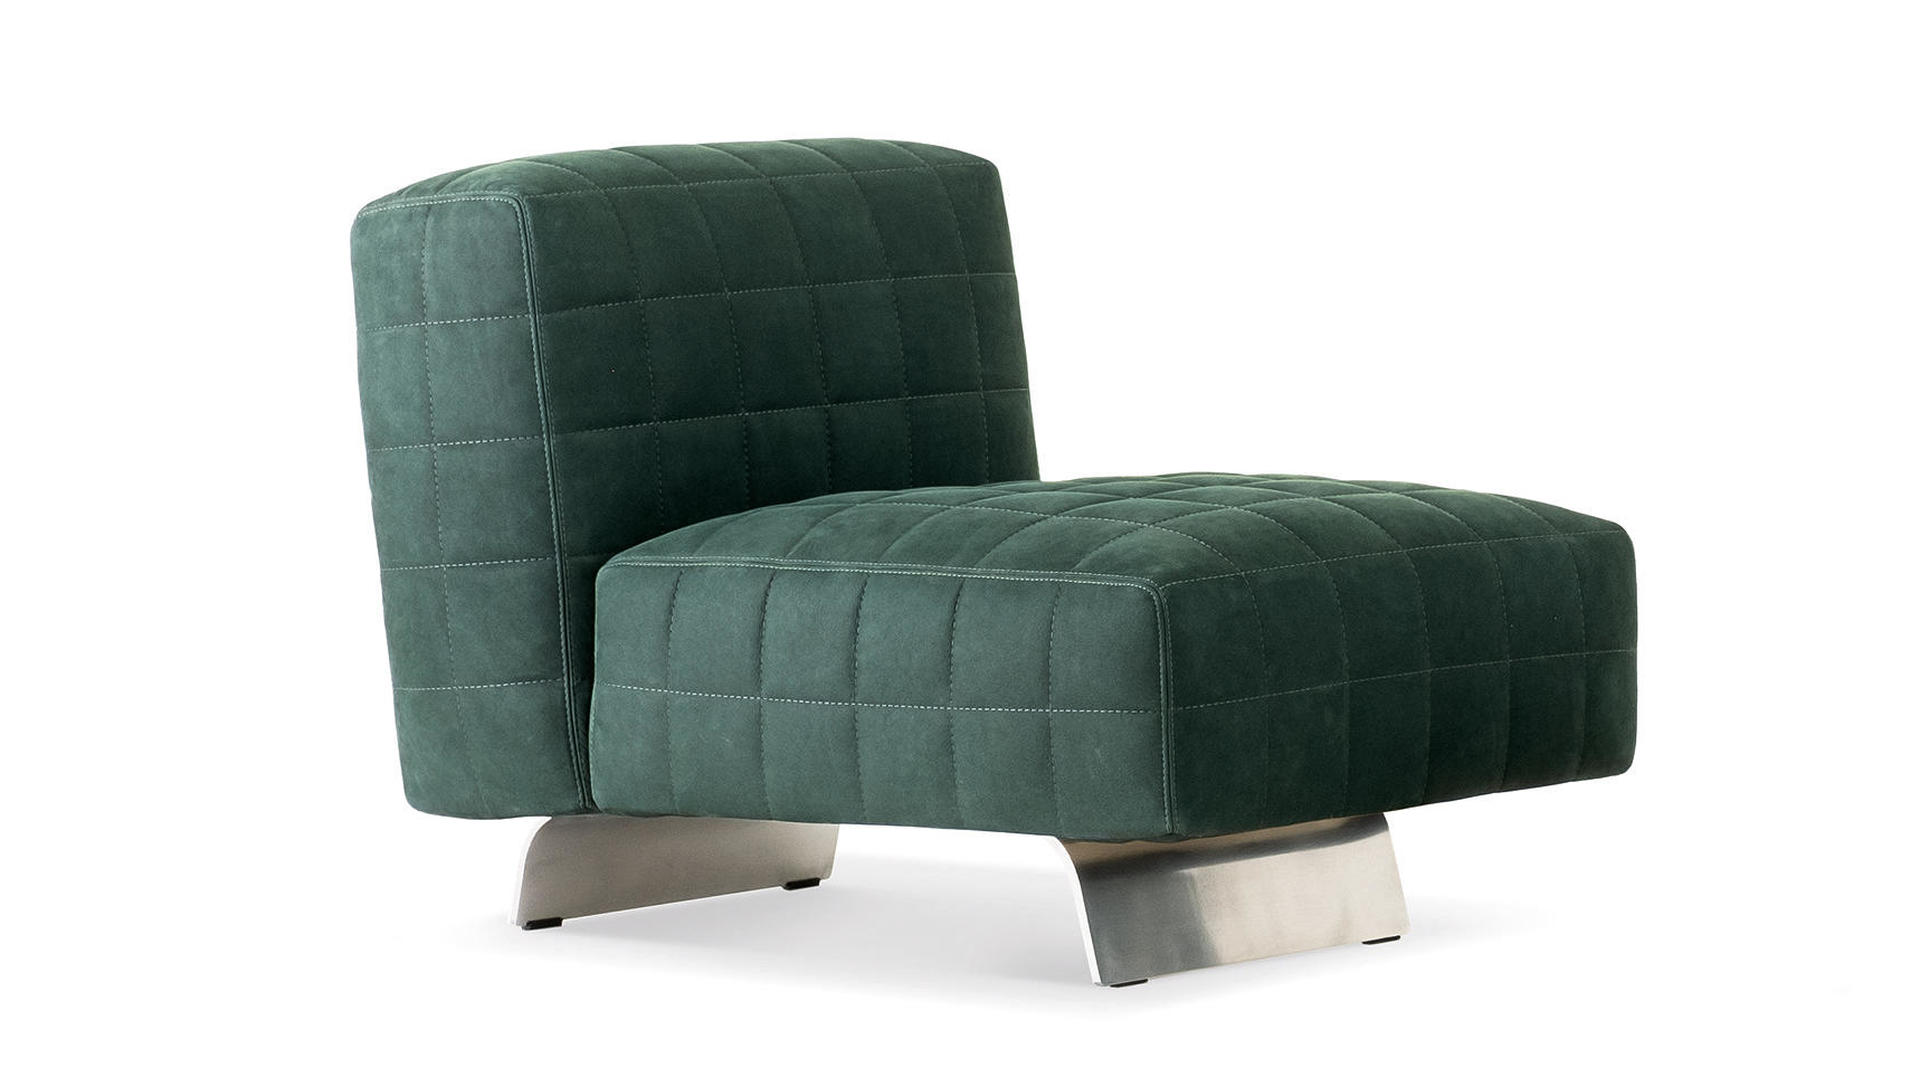 HORA Barneveld Minotti Twiggy bank modulaire sofa design meubelen designmeubelen 10.jpg